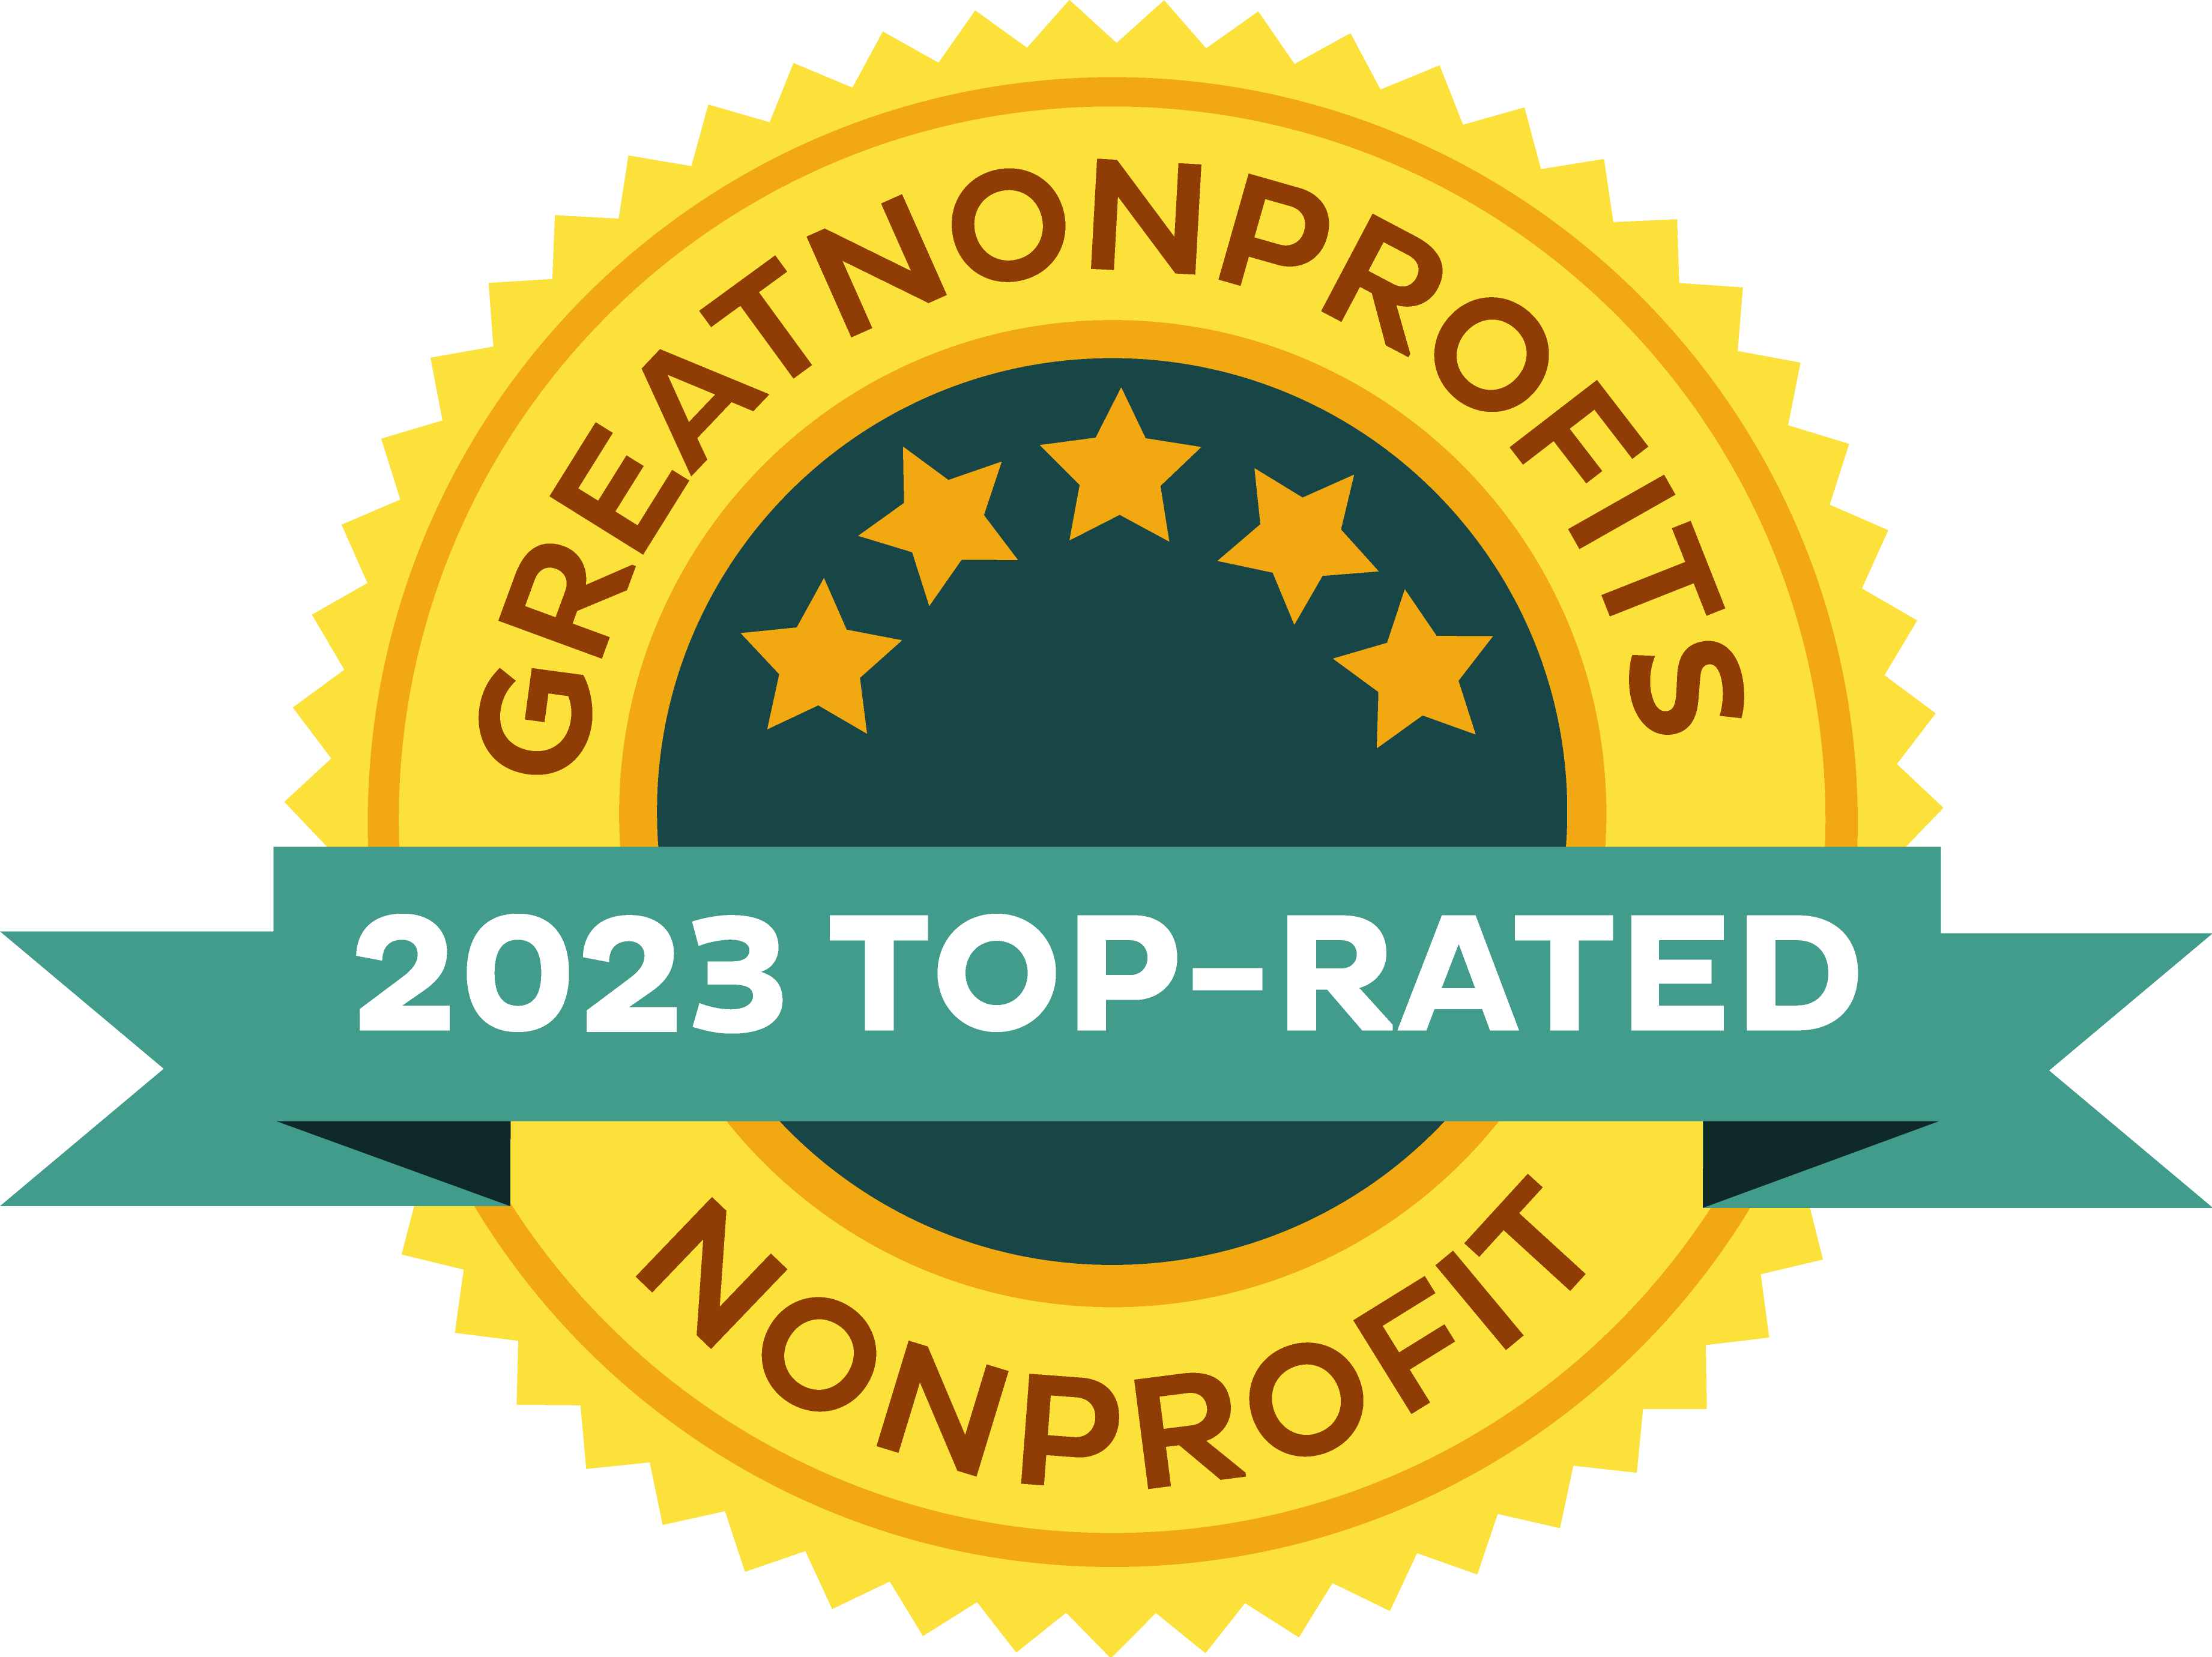 Great Nonprofits 2023 Top-Rated Nonprofit